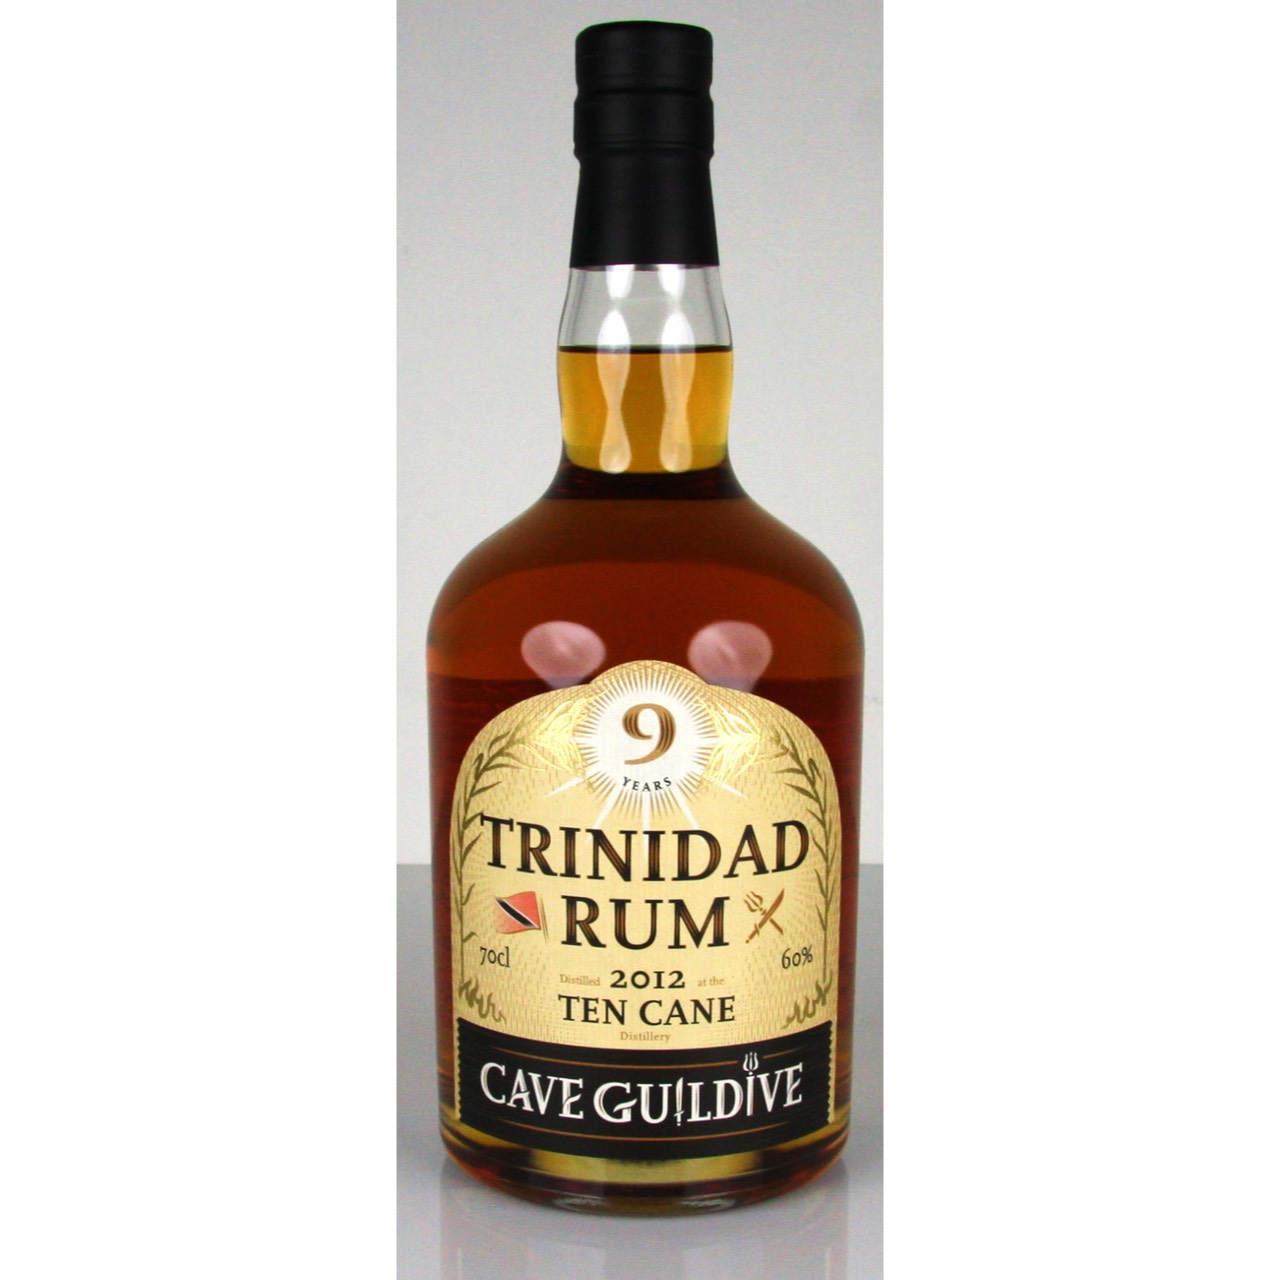 Bottle image of Trinidad Rum